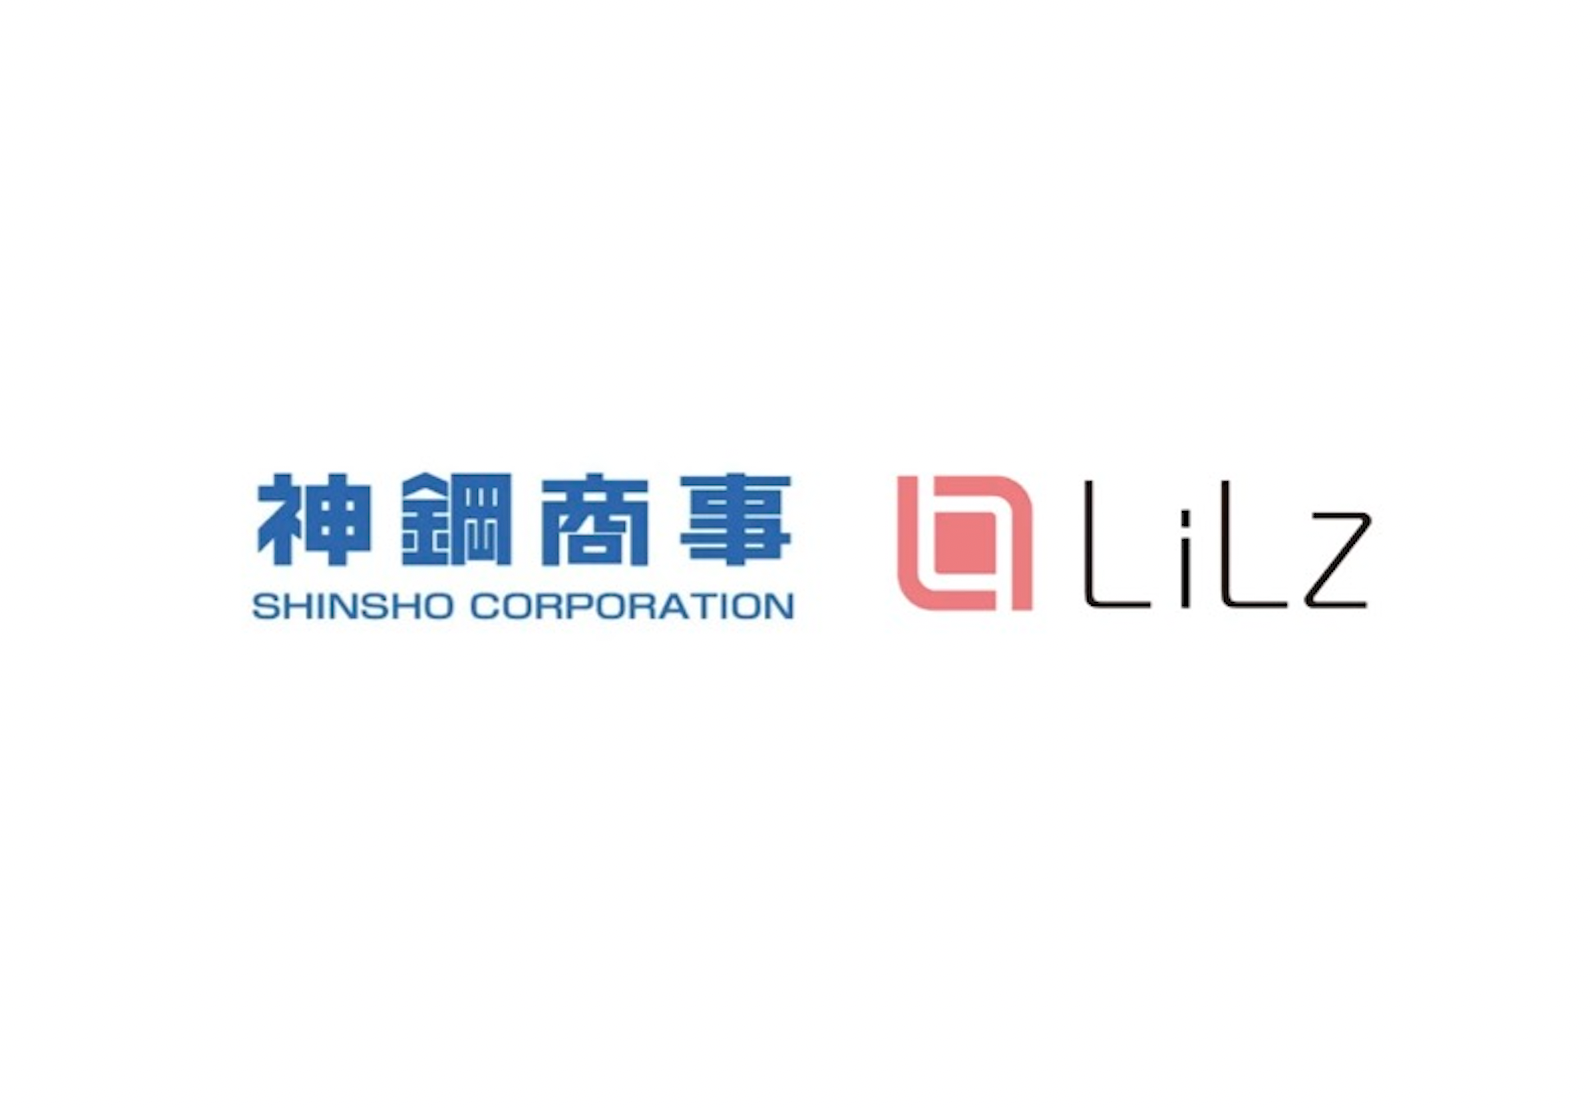 LiLzが提供する遠隔点検IoT・AIサービス「LiLz Gauge」と神鋼商事株式会社が連携開始